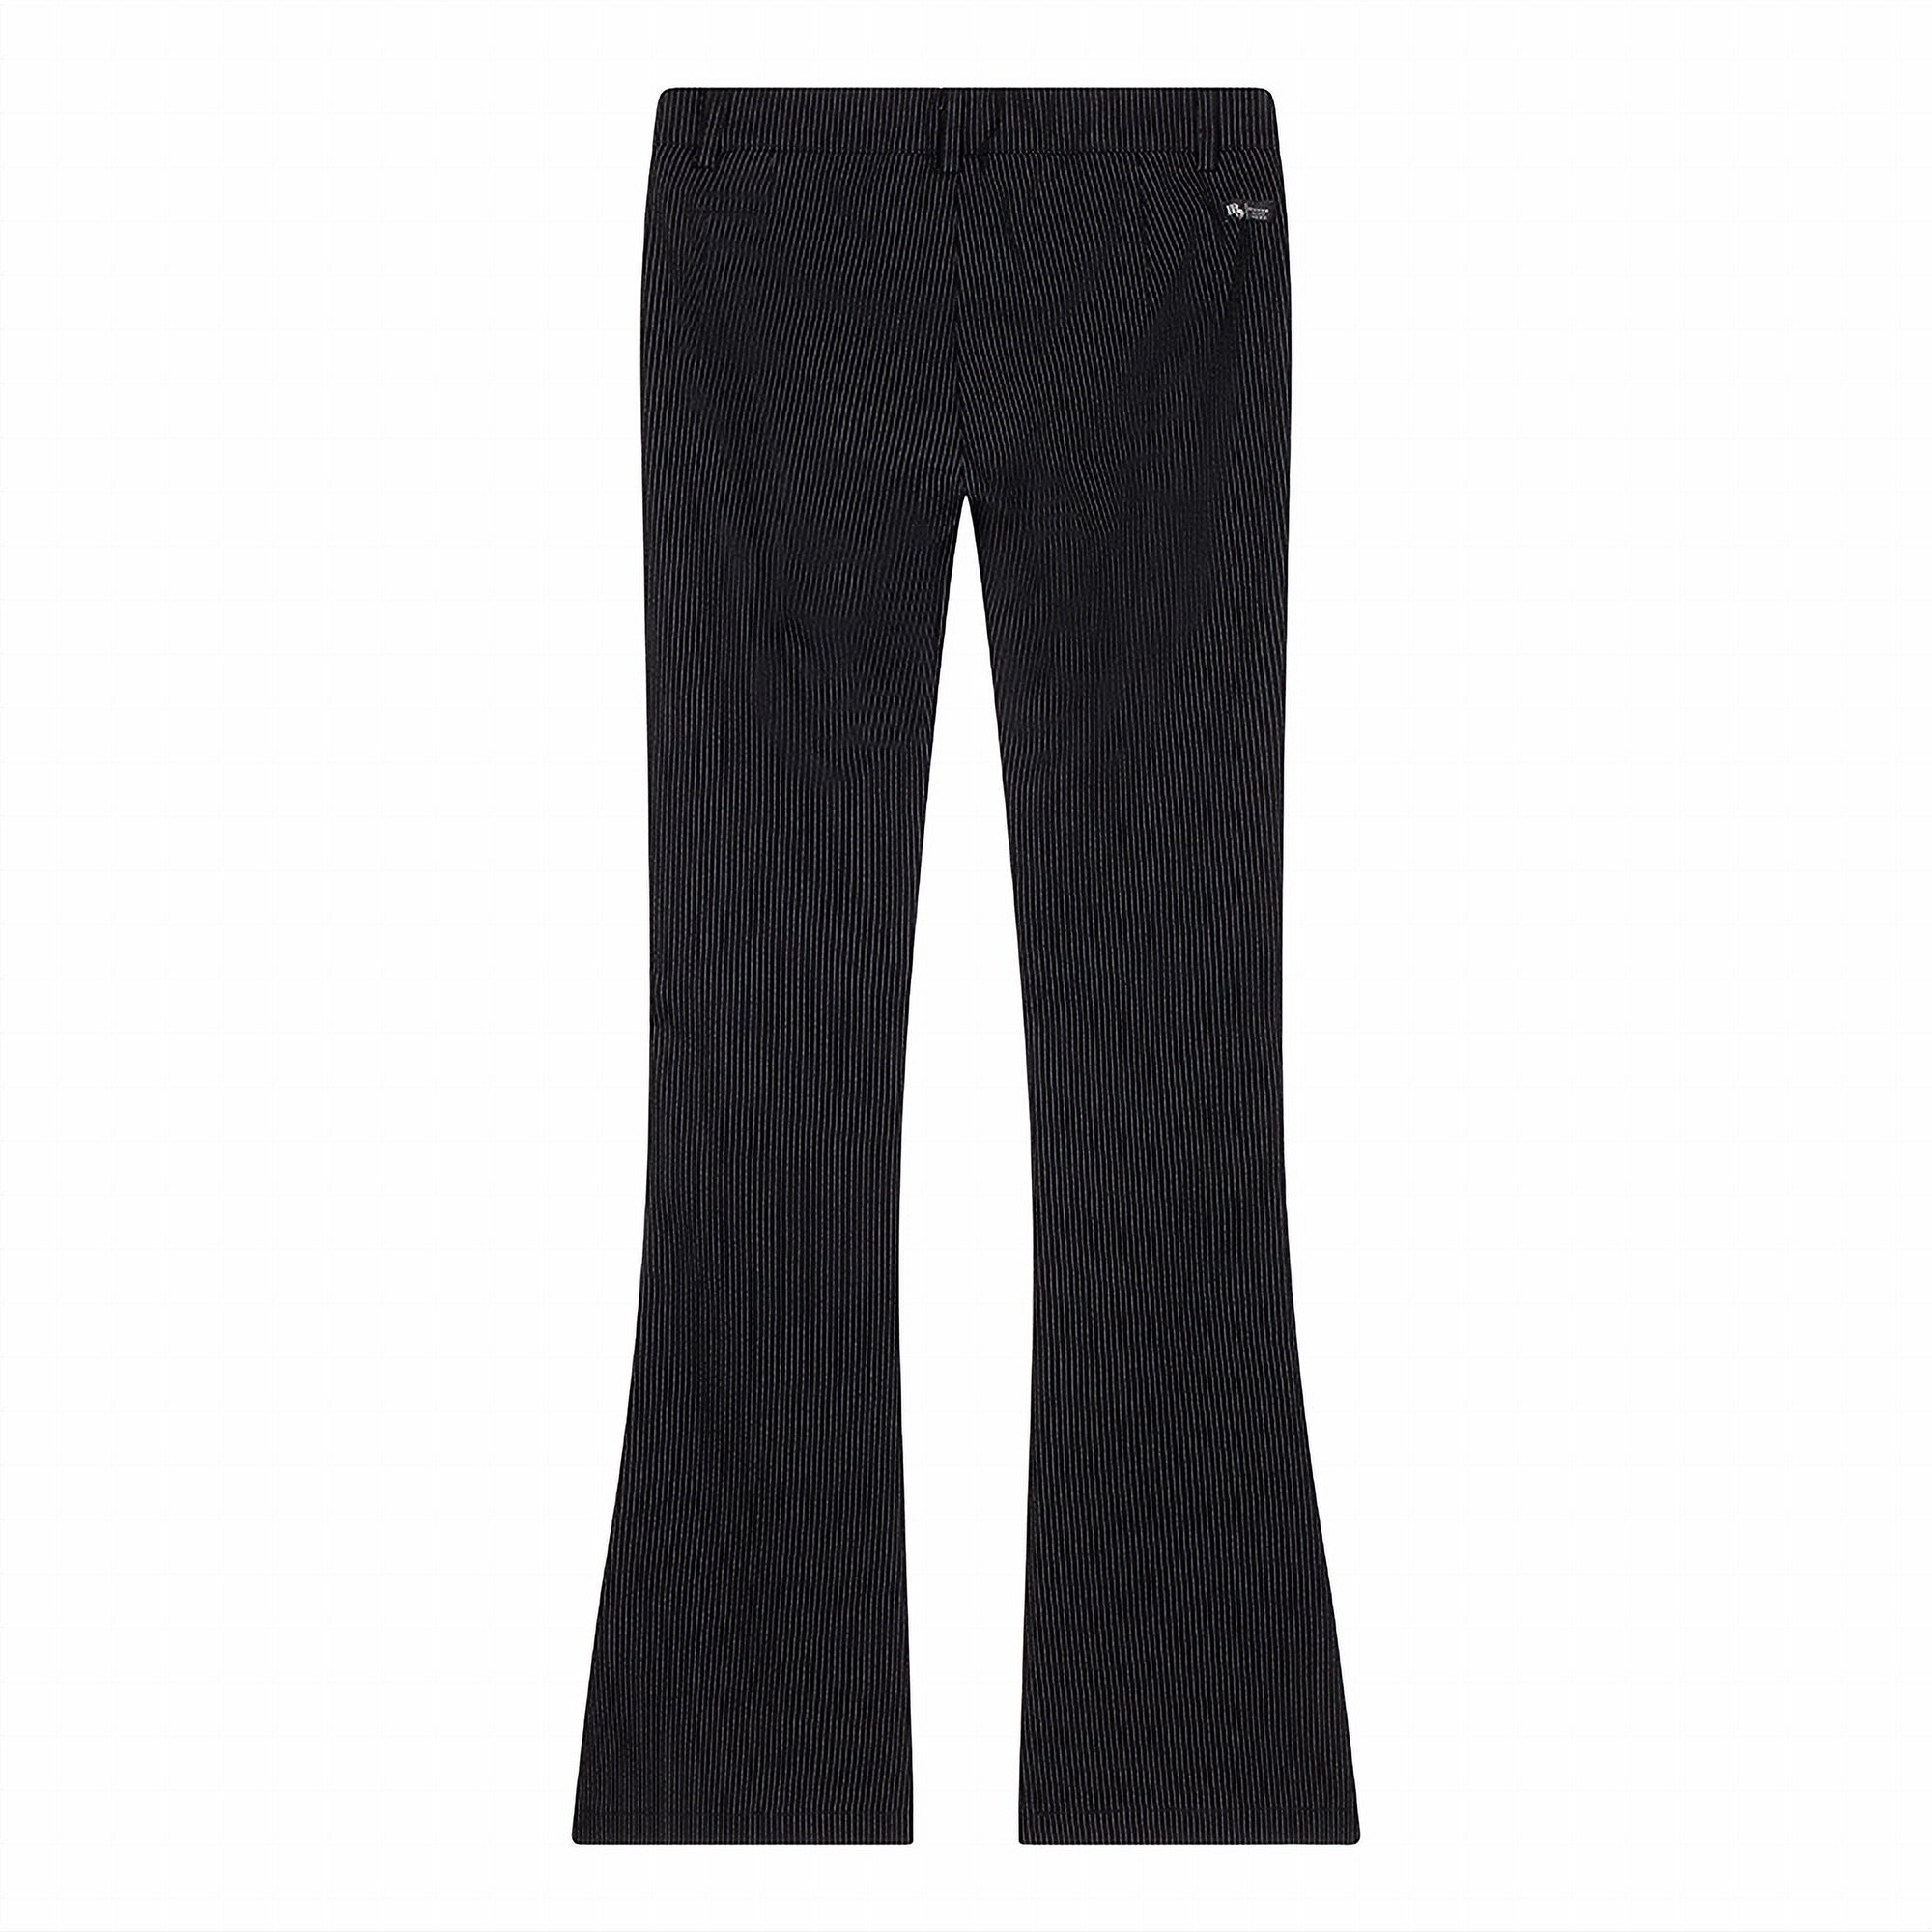 Meisjes Flare Pants Pinstripe van Indian Blue Jeans in de kleur Black in maat 176.